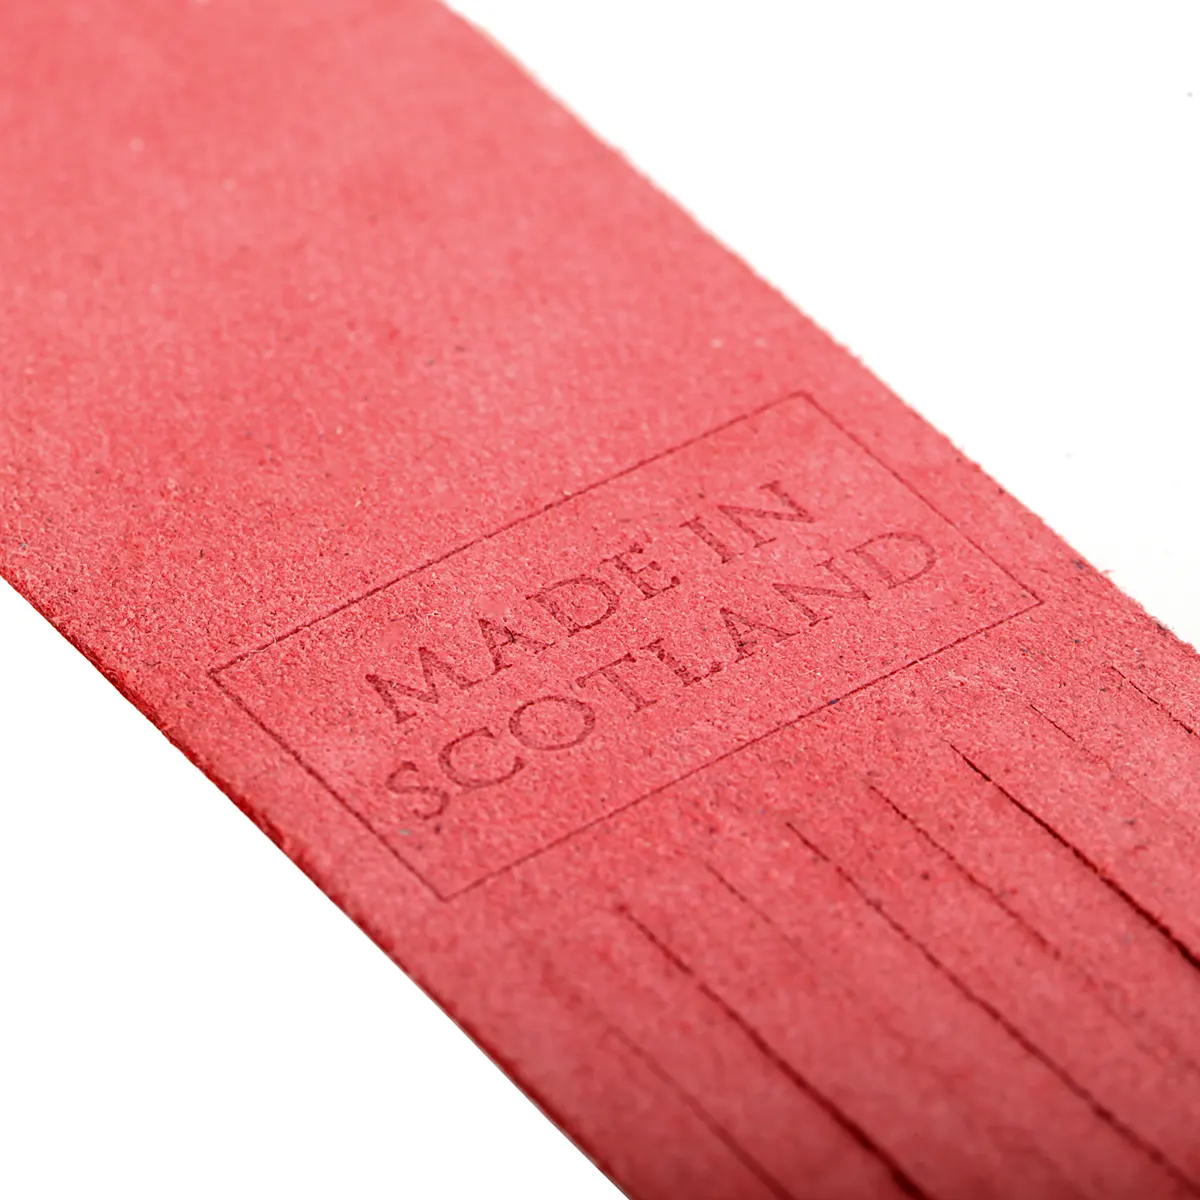 Lewis and Harris - Lesezeichen aus Leder in Rot - Made in Scotland